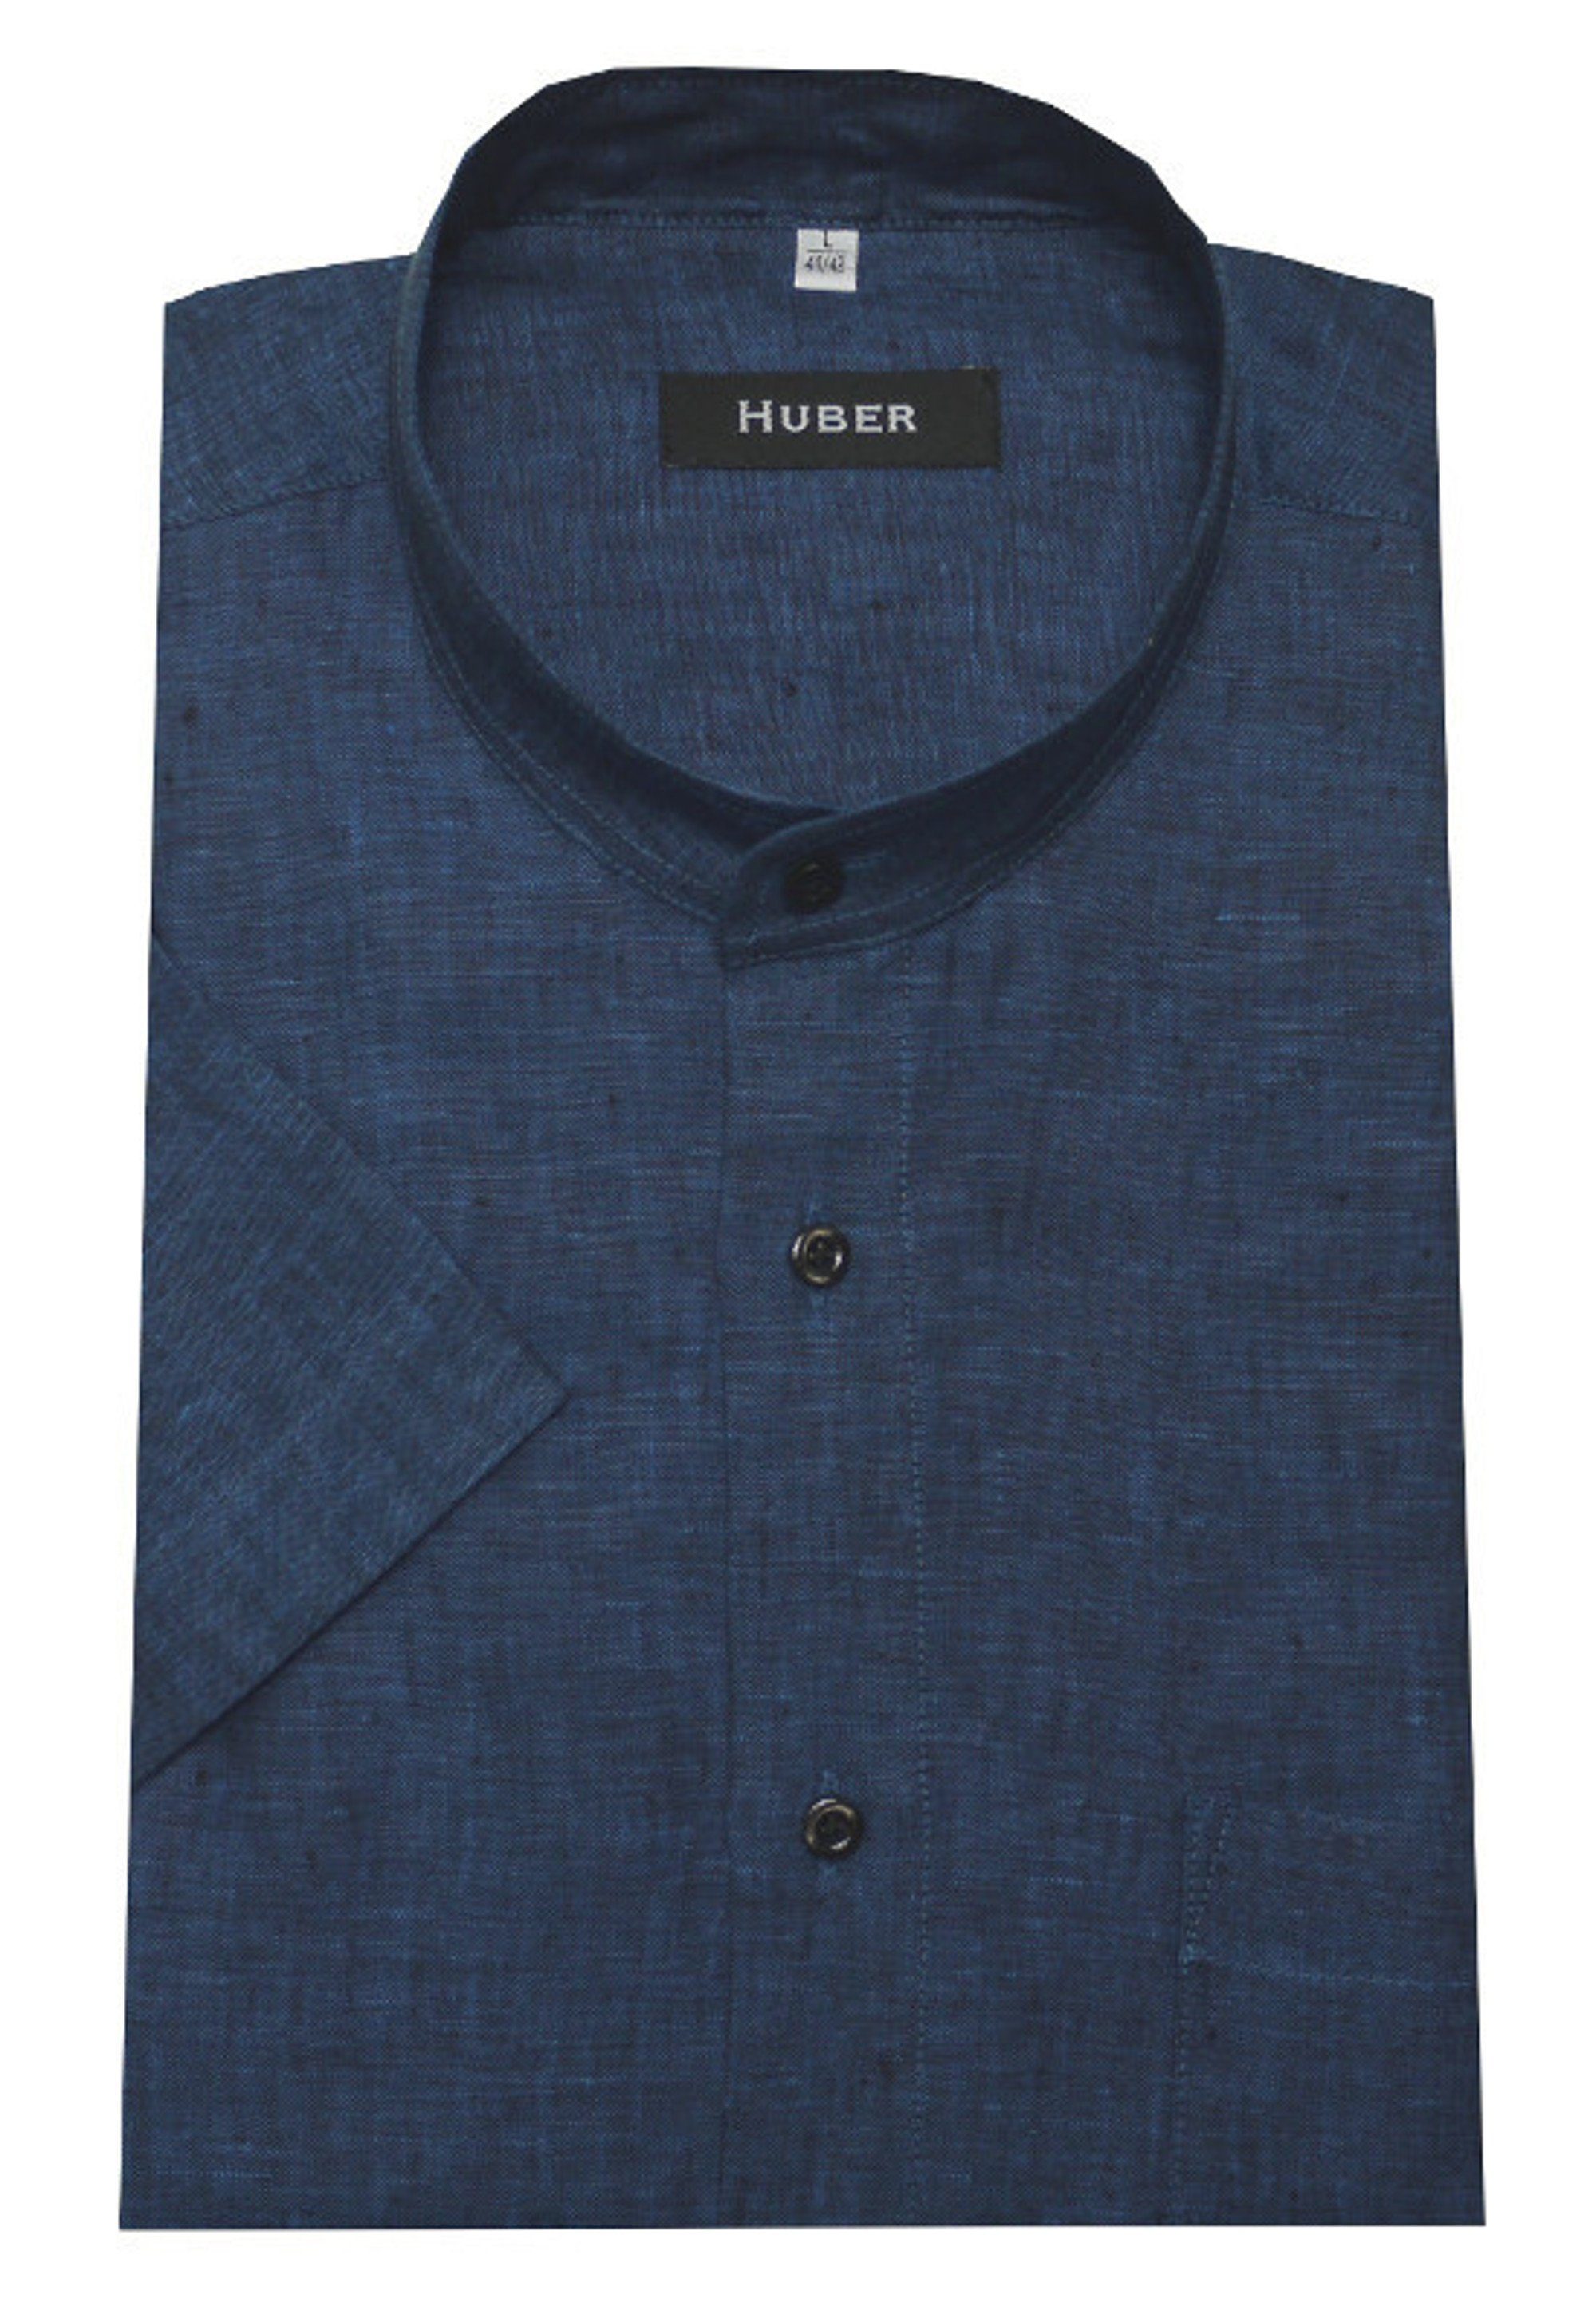 HU-0114 Regular Kurzarmhemd Stehkragen Hemden Stoff leichter Kurzarm blau 100%Leinen-feiner Huber Fit